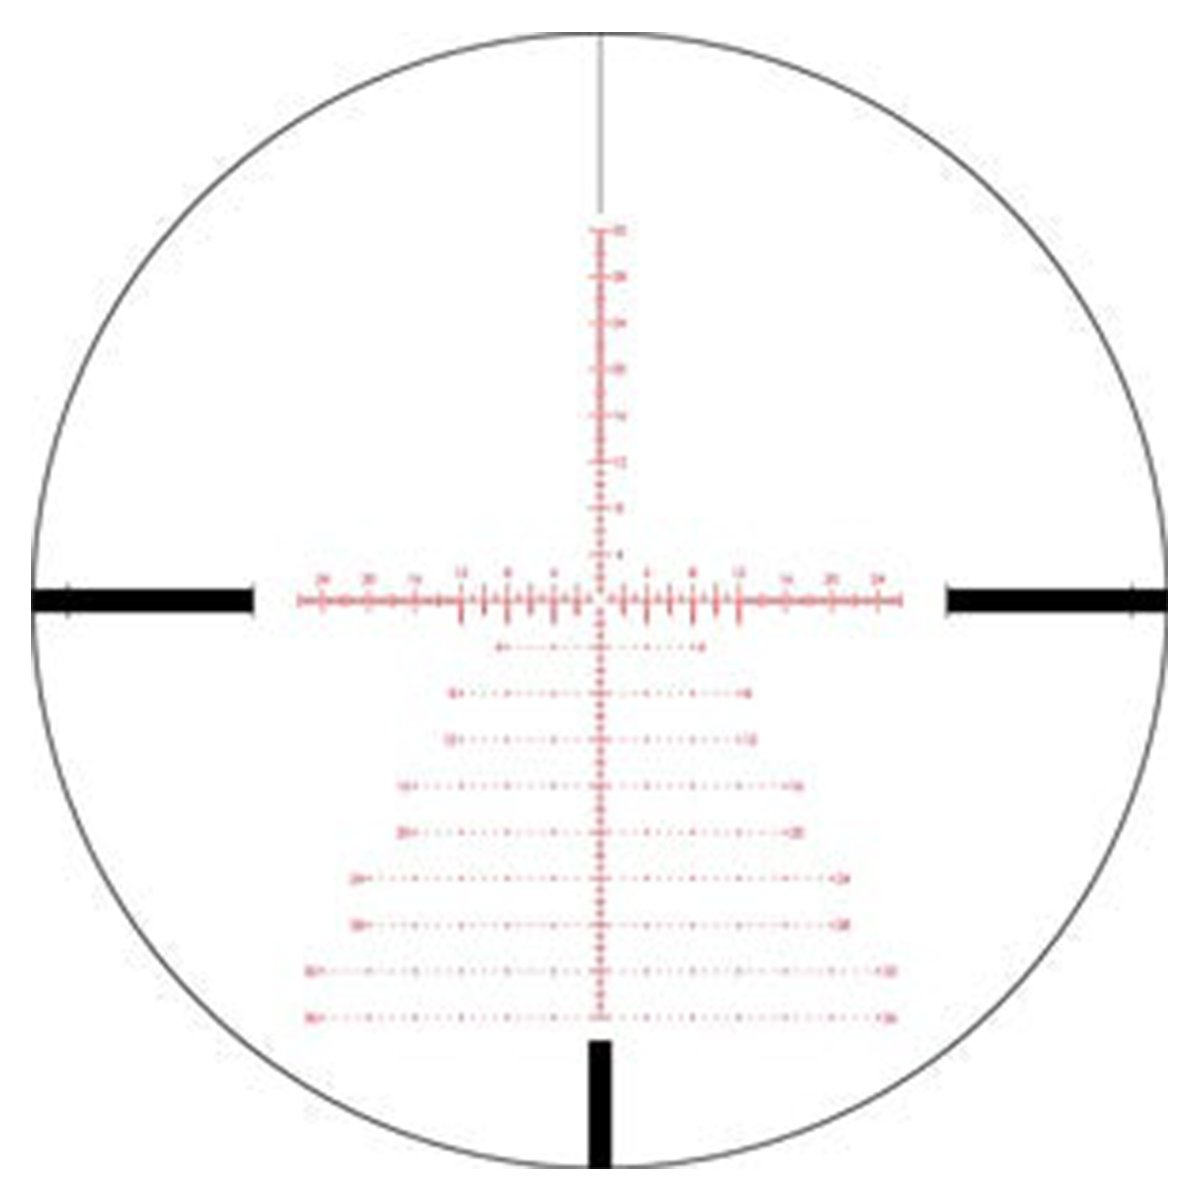 Vortex Razor HD Gen II FFP 4.5-27x56 EBR-7C MOA Riflescope in  by GOHUNT | Vortex Optics - GOHUNT Shop